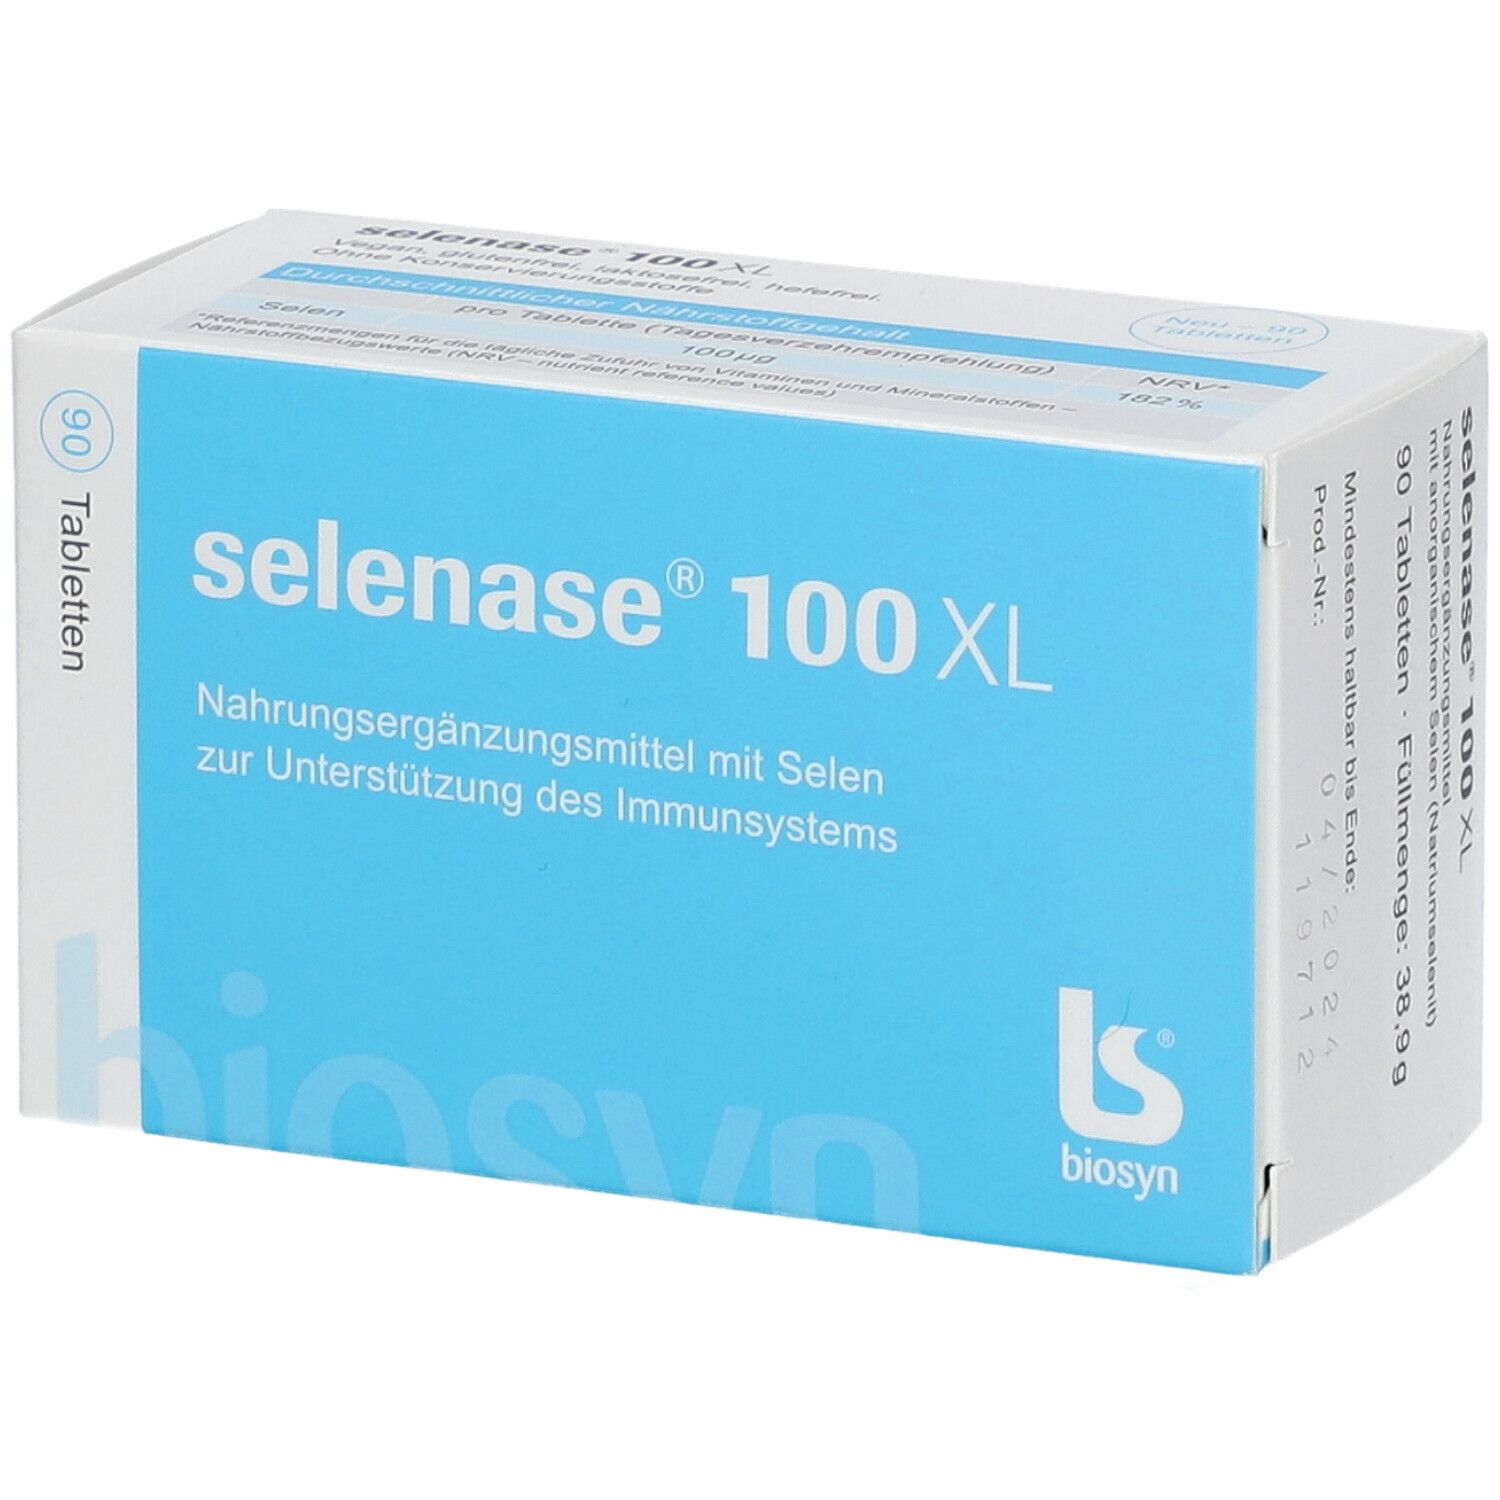 biosyn Arzneimittel GmbH selenase® 100 XL